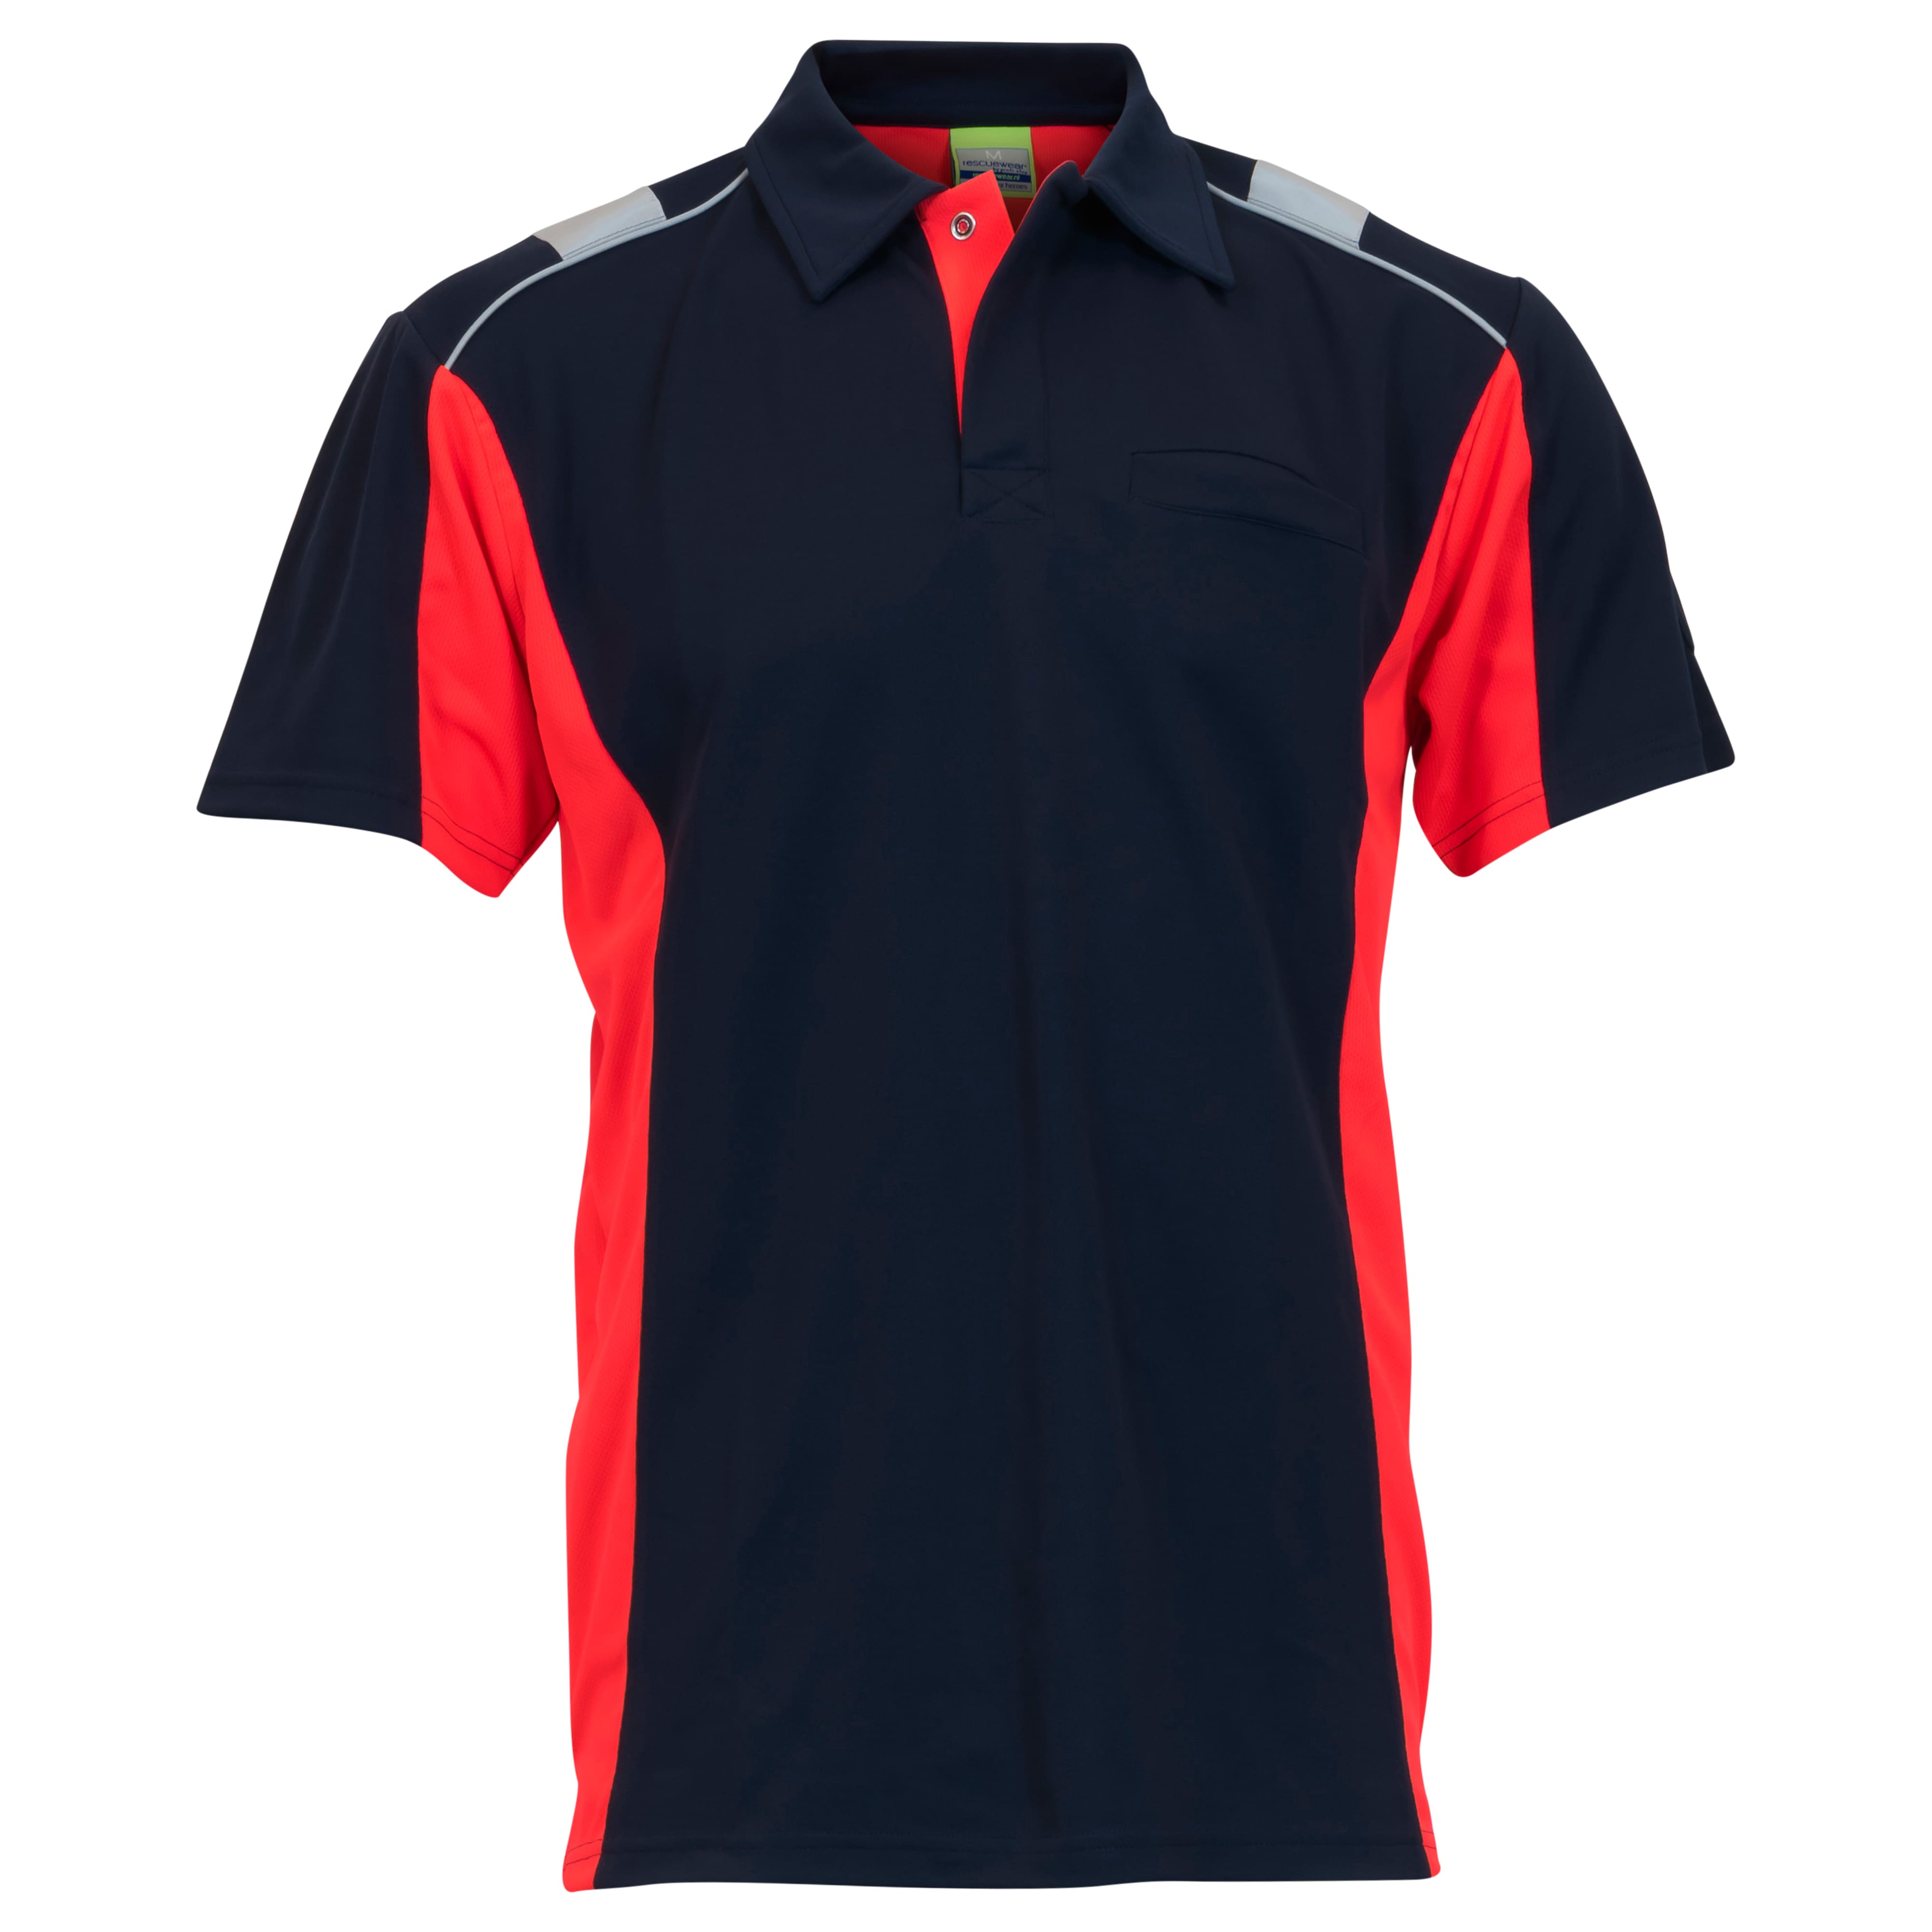 Rescuewear Poloshirt kurze Ärmel Dynamic Marineblau / Neon Rot - 40